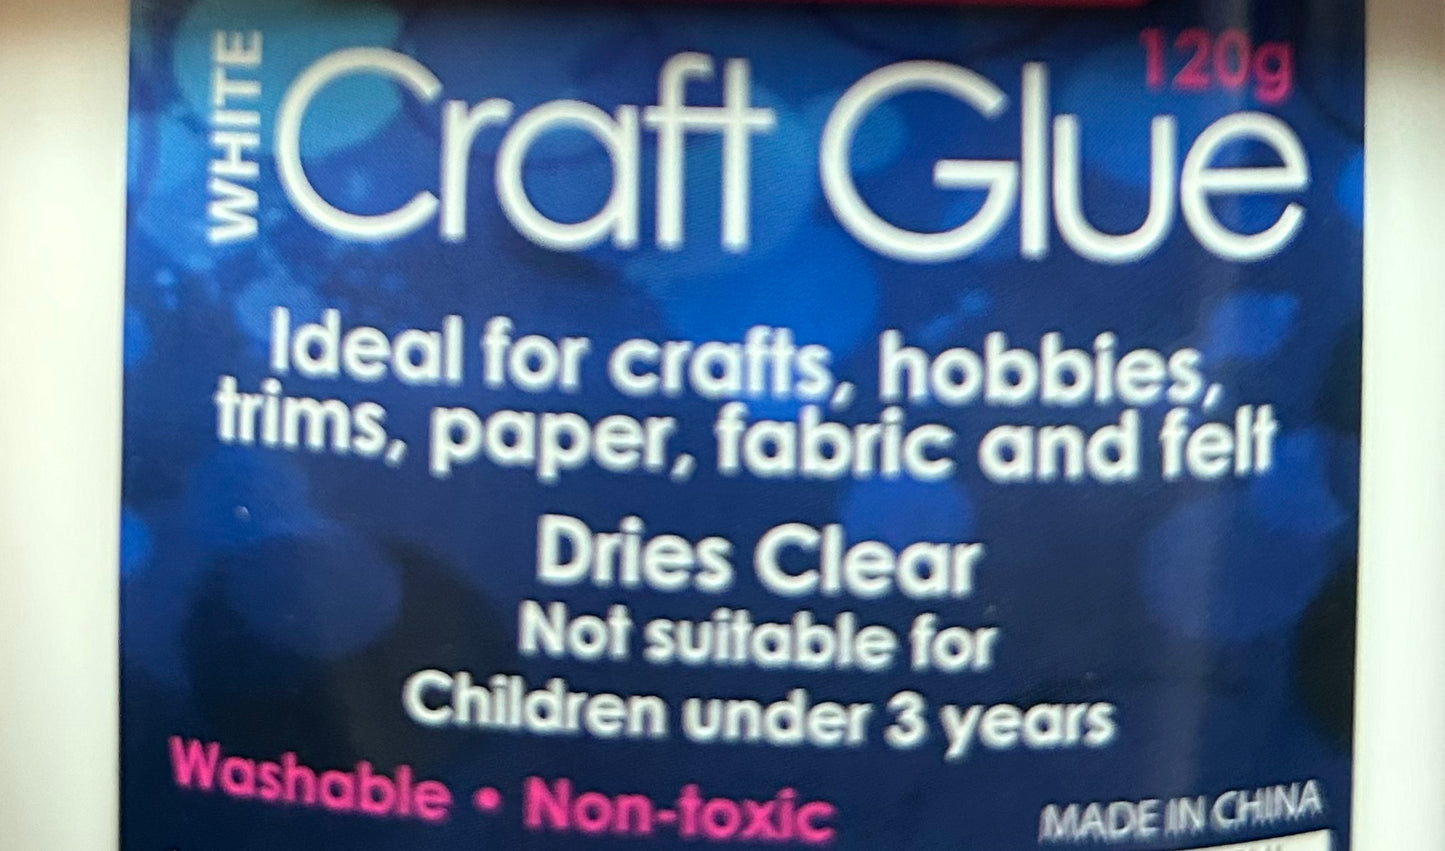 Craft Glue